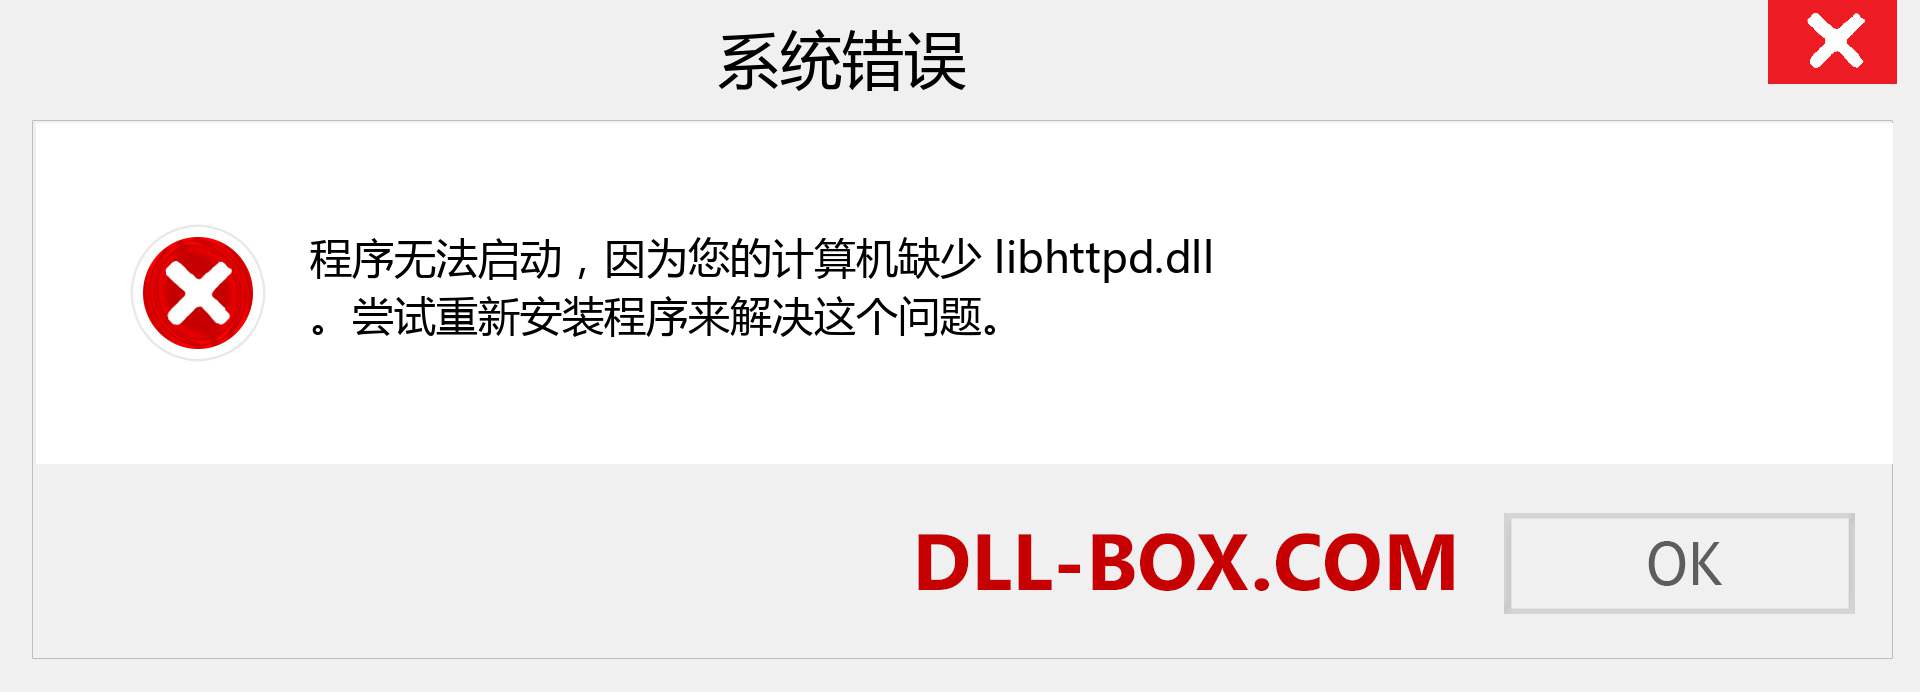 libhttpd.dll 文件丢失？。 适用于 Windows 7、8、10 的下载 - 修复 Windows、照片、图像上的 libhttpd dll 丢失错误